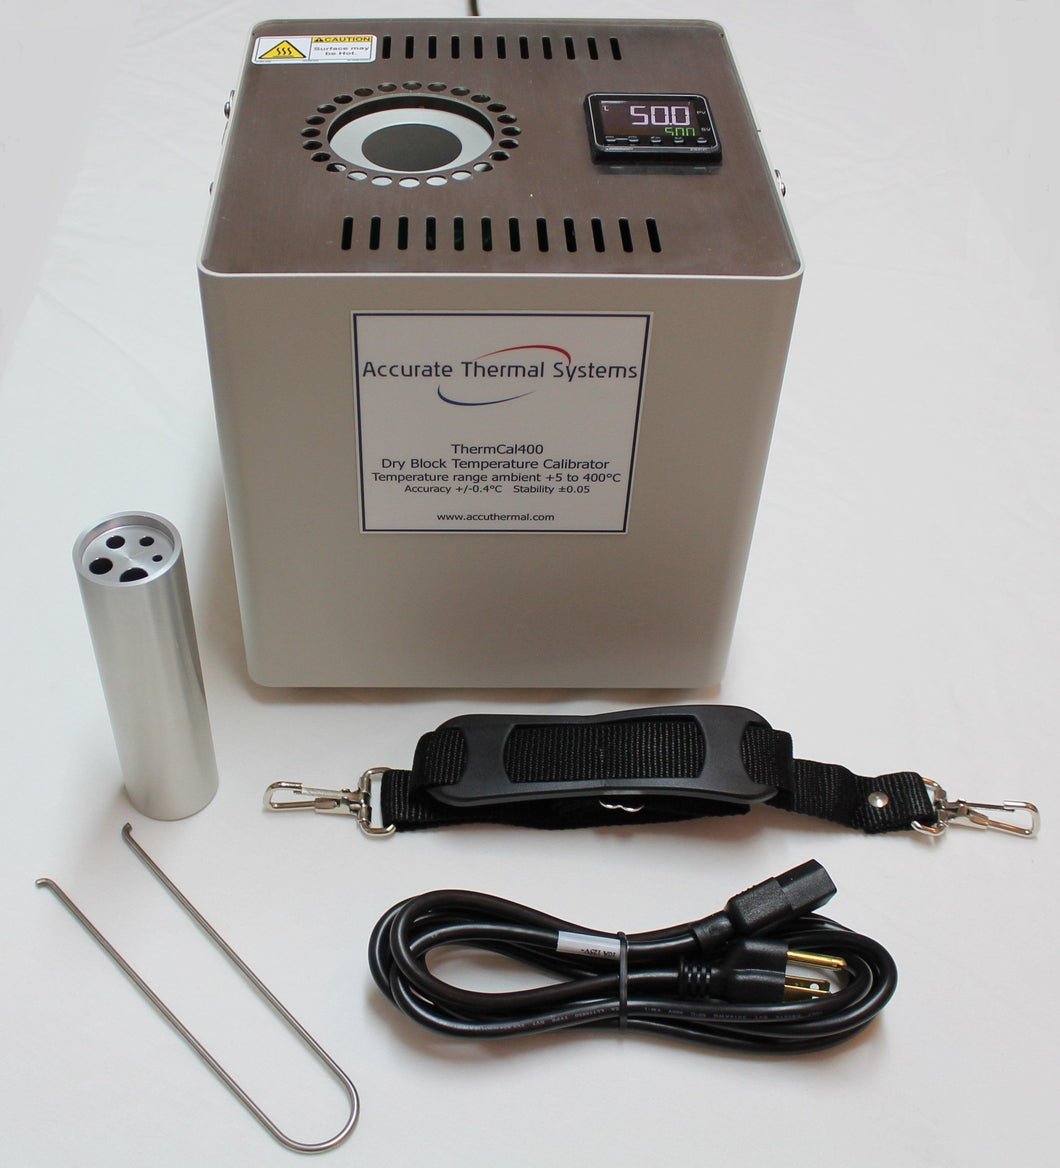 ThermCal400 Dry Block Temperature Calibrator